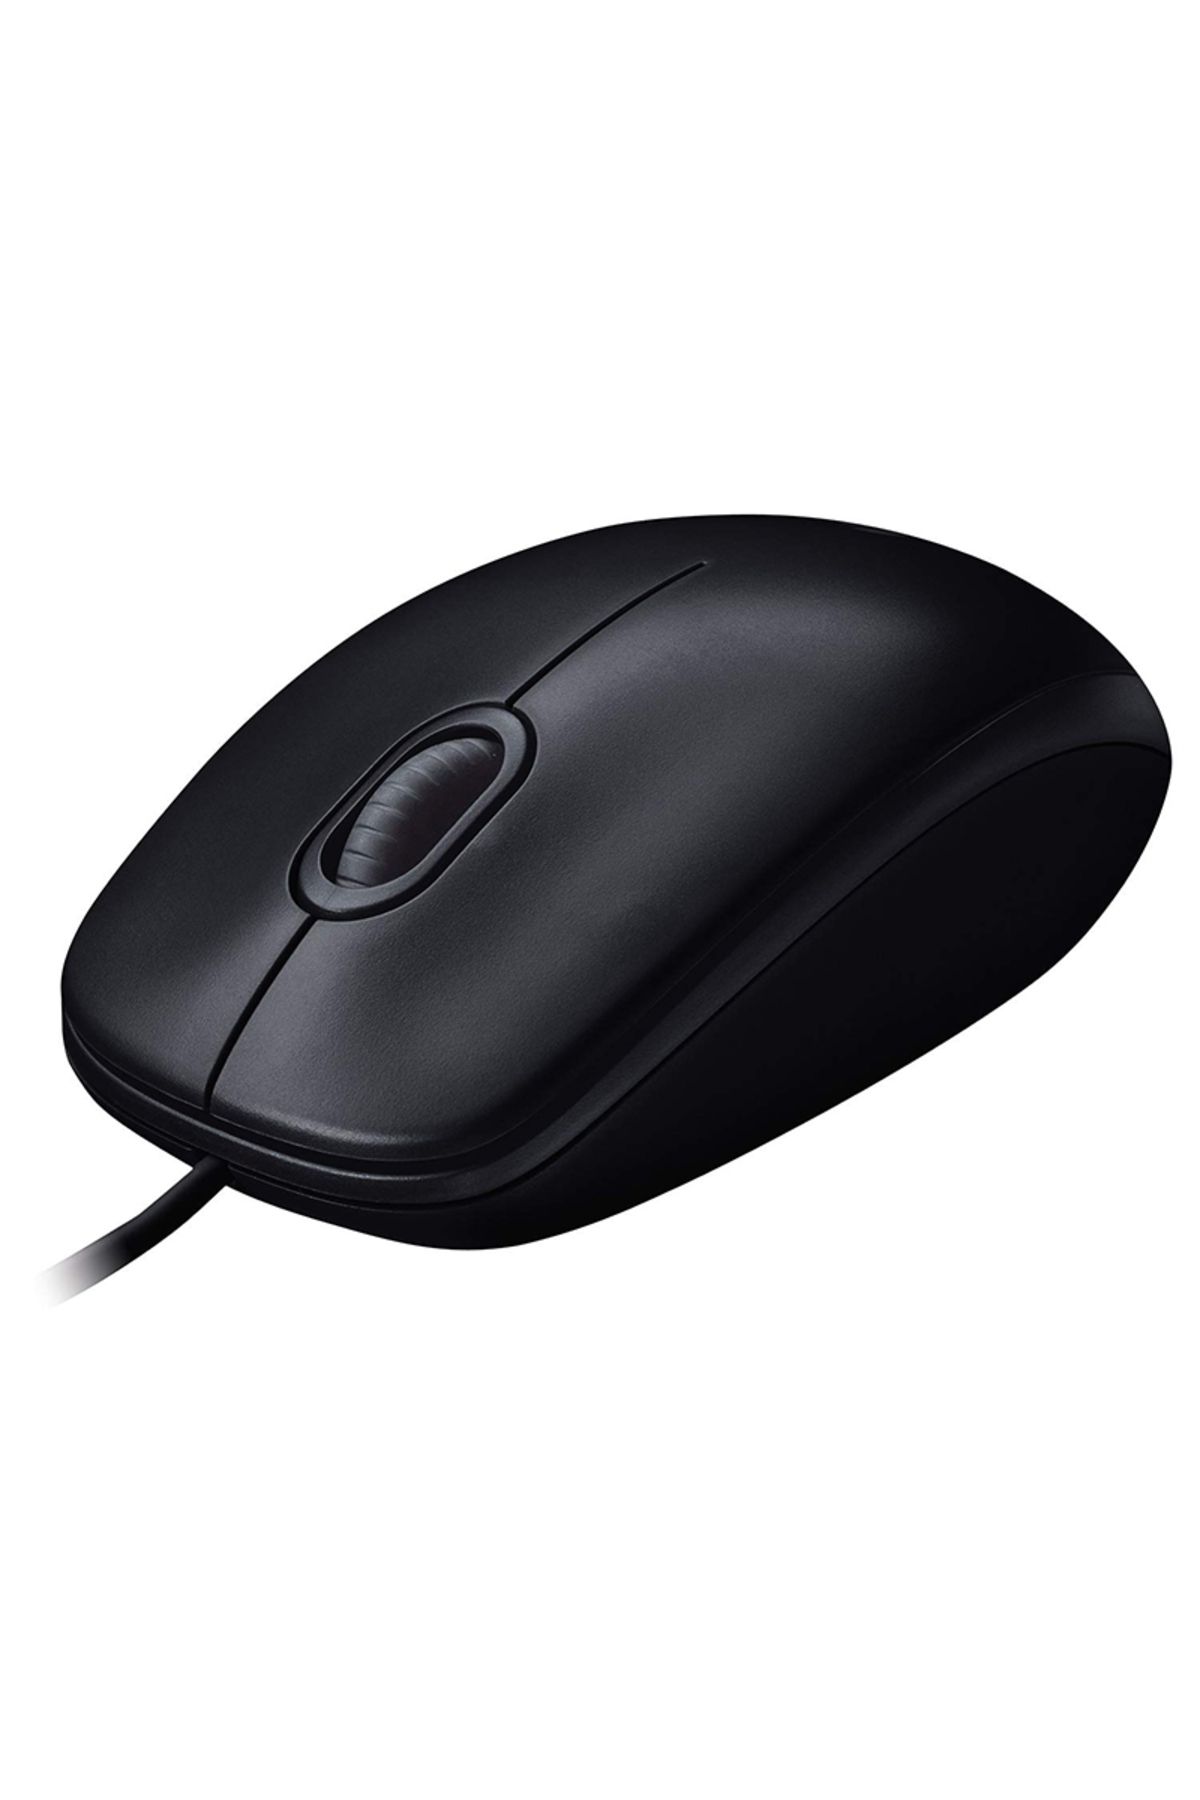 Go İthalat Logıtech M90 Kablolu Siyah Usb Mouse (4202)